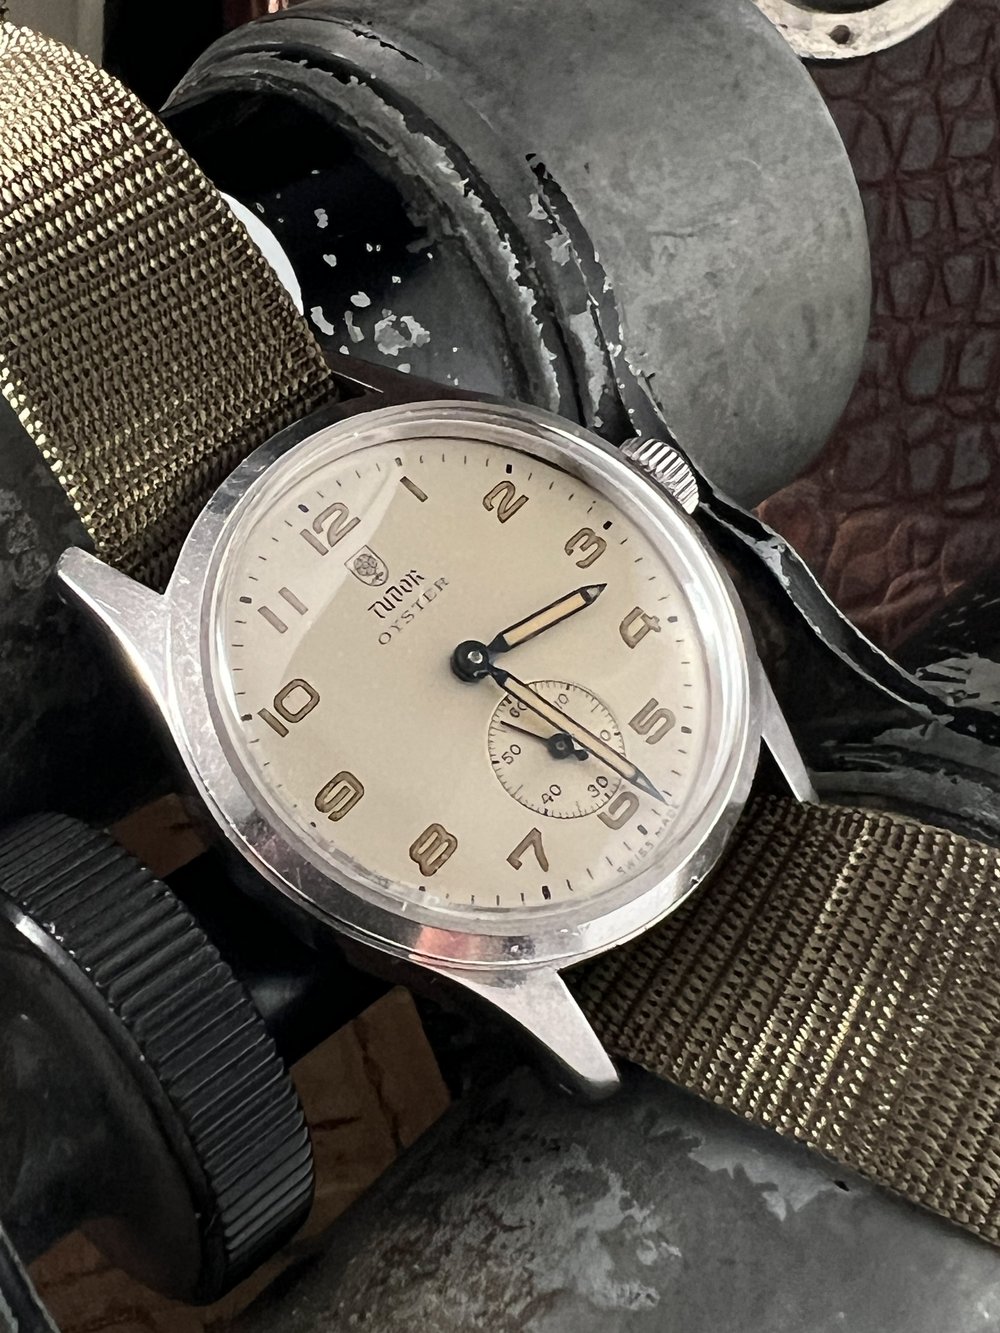 Rolex Watches — Cool Vintage Watches